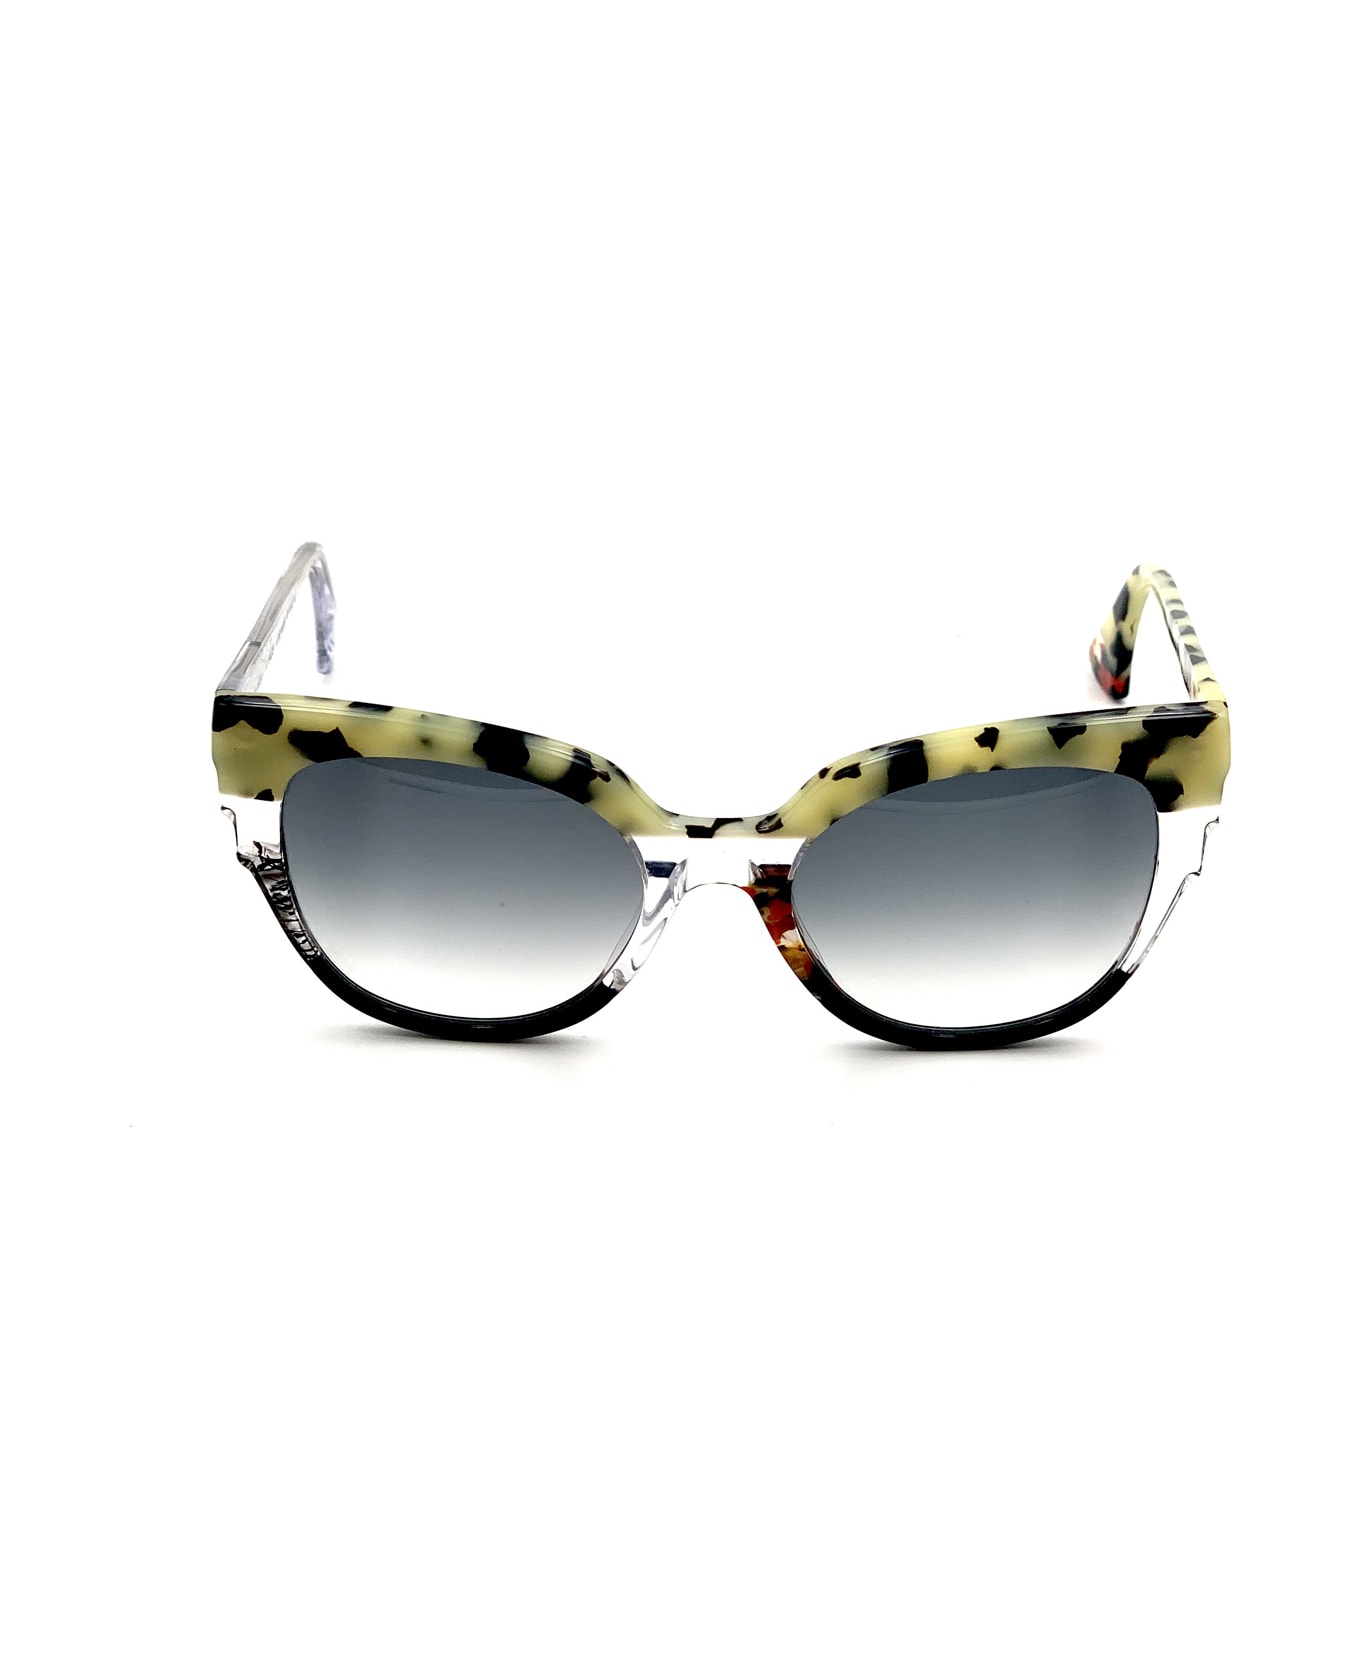 Silvian Heach Jumble 492 Sunglasses - Multicolore